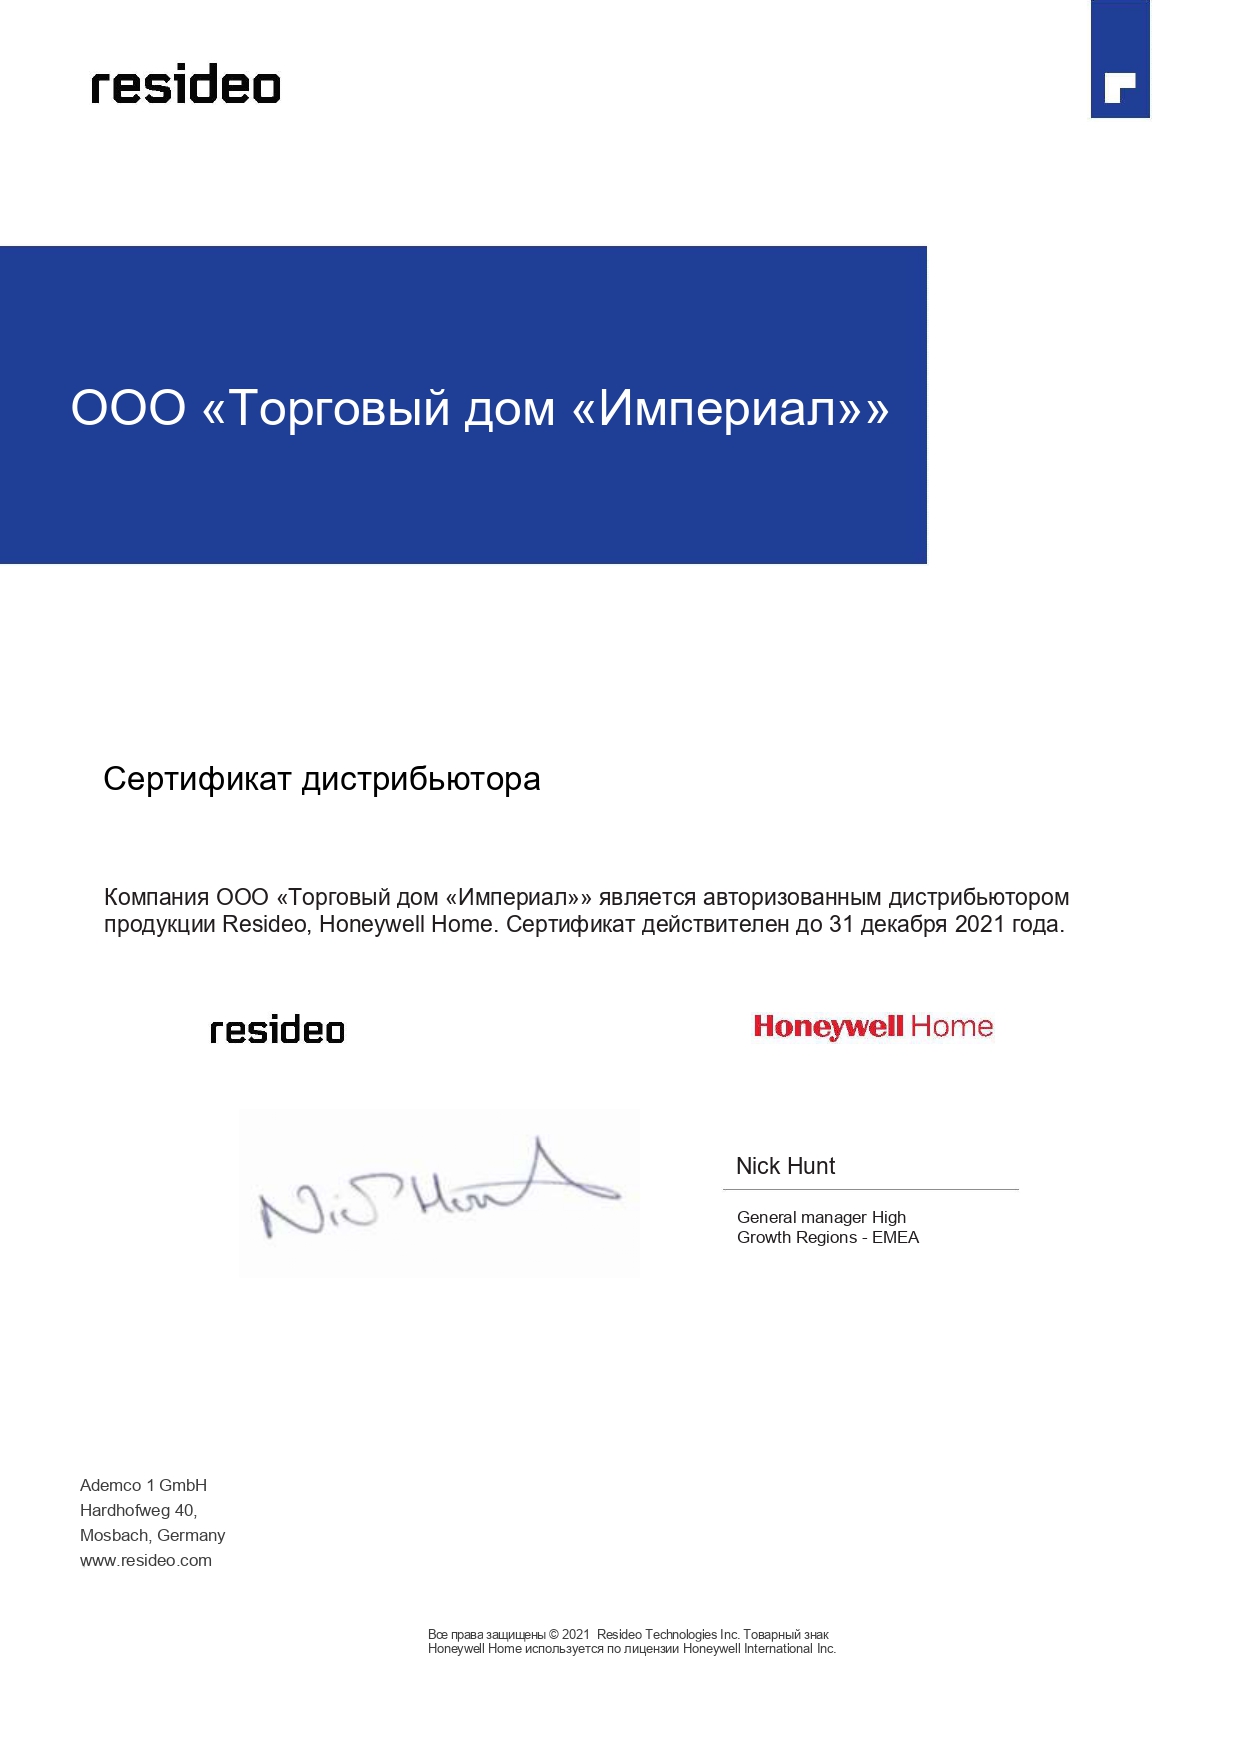 Сертификат офиц. дистрибьютора продукции Resideo, Honeywell Home.jpg